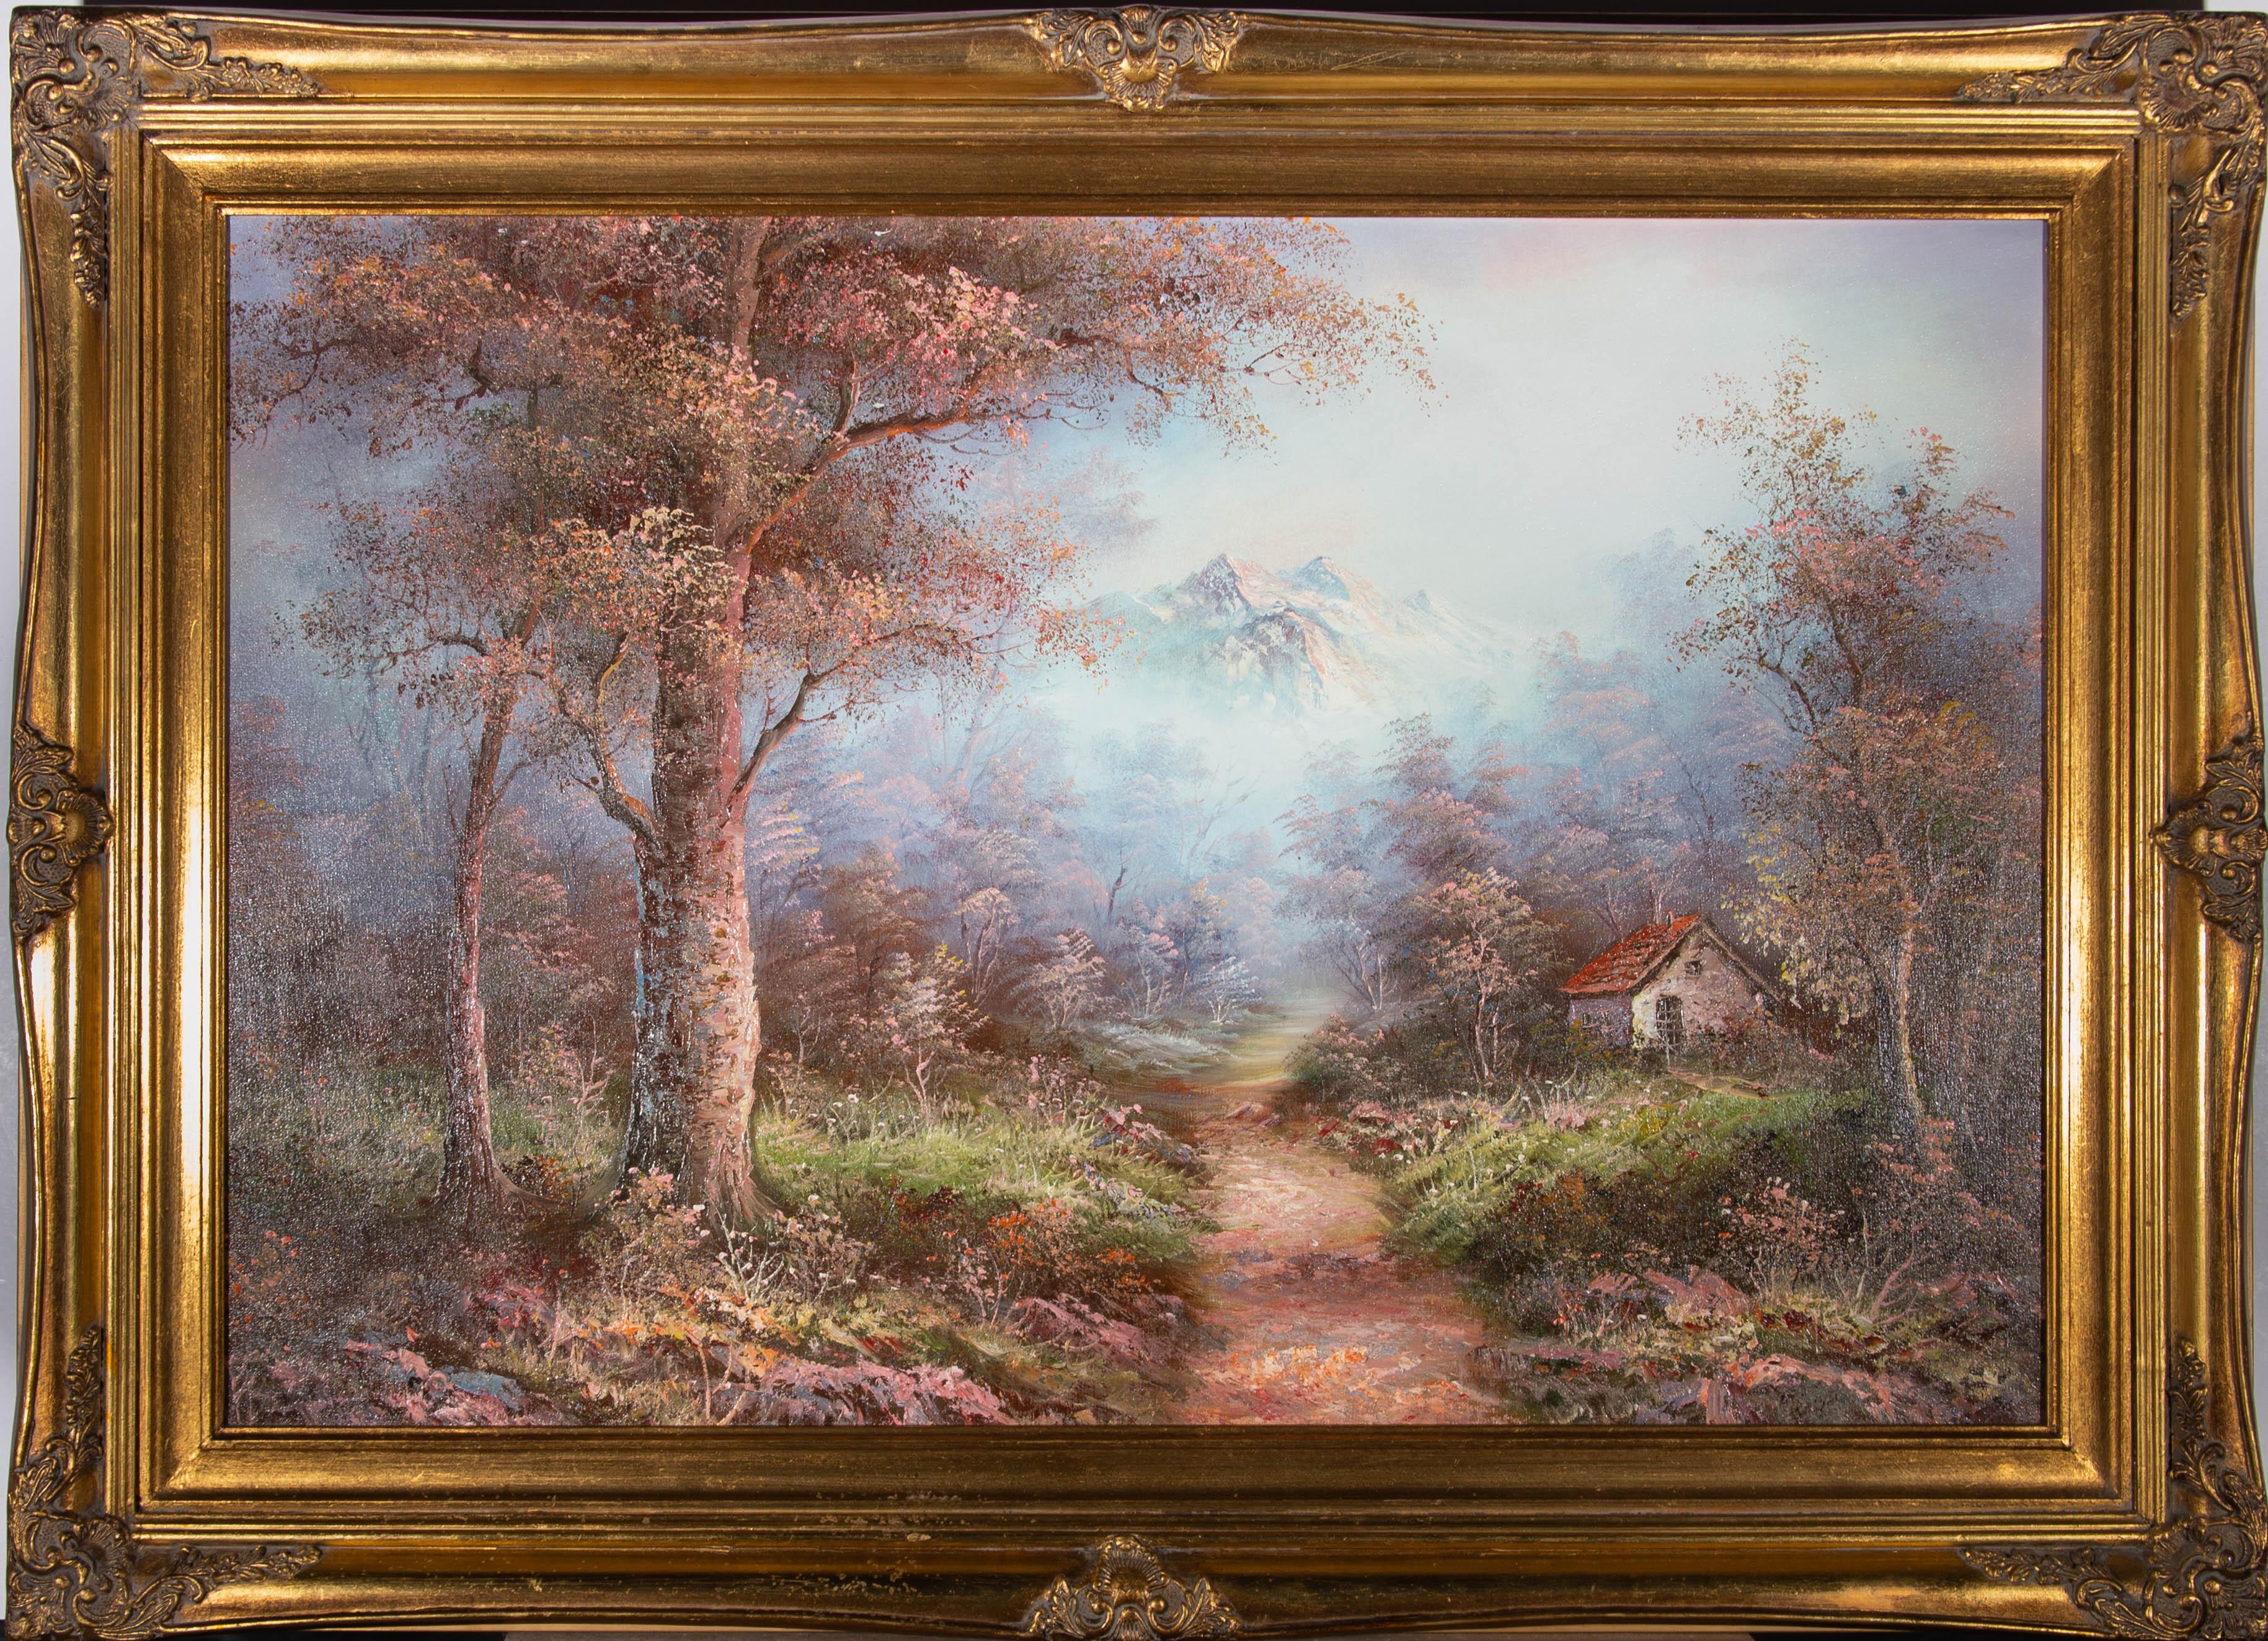 Unknown Landscape Painting - 20th Century Oil - Hazy Mountain Landscape